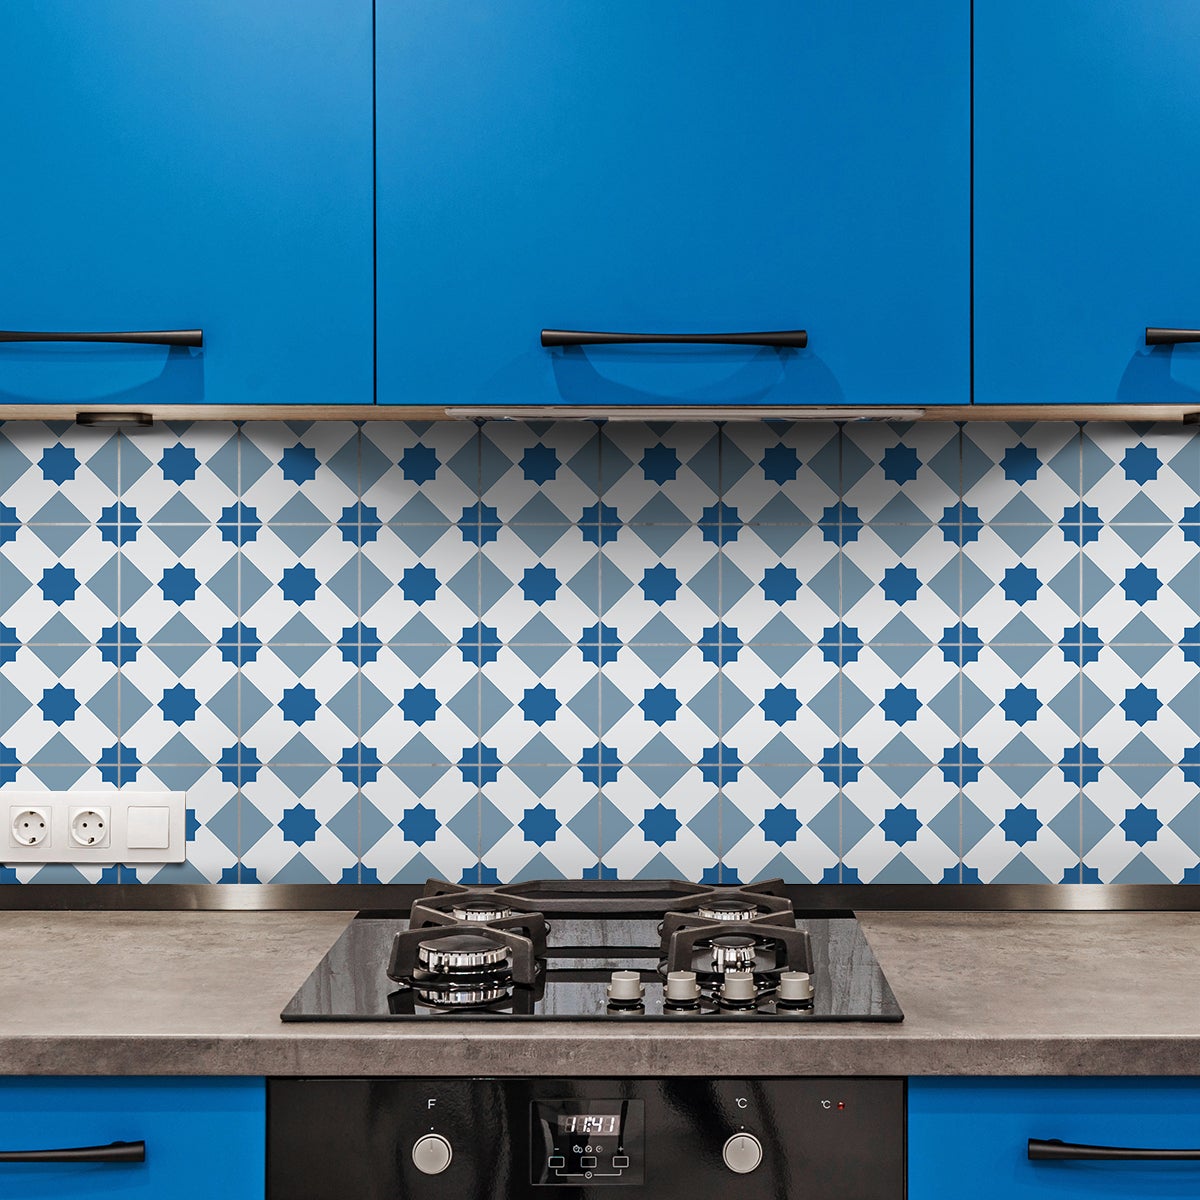 30 vinilo baldosas azulejos Elettra - adhesivo de pared - revestimiento  sticker mural decorativo - 100x120cm-30stickers20x20cm